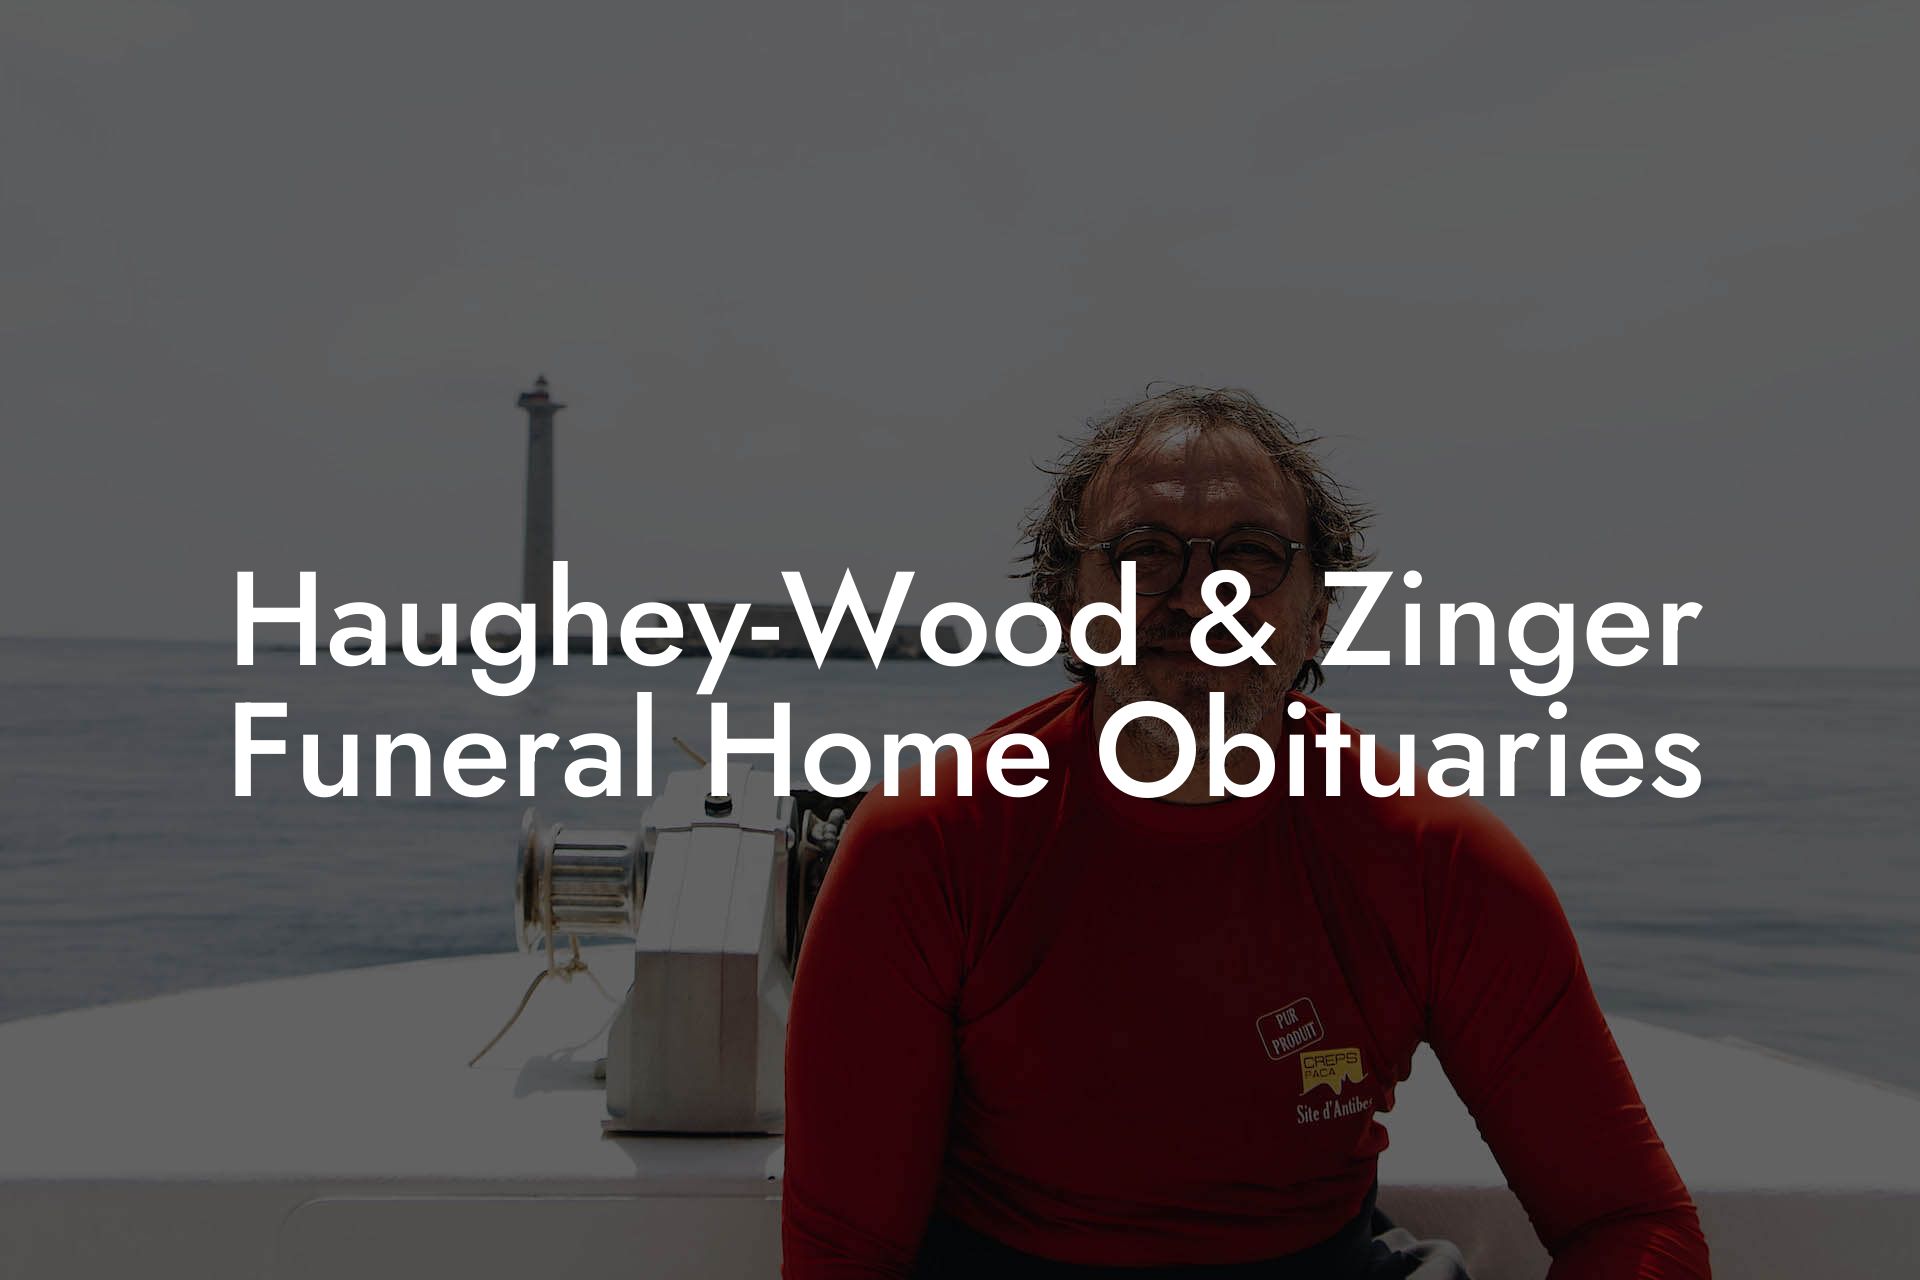 Haughey-Wood & Zinger Funeral Home Obituaries